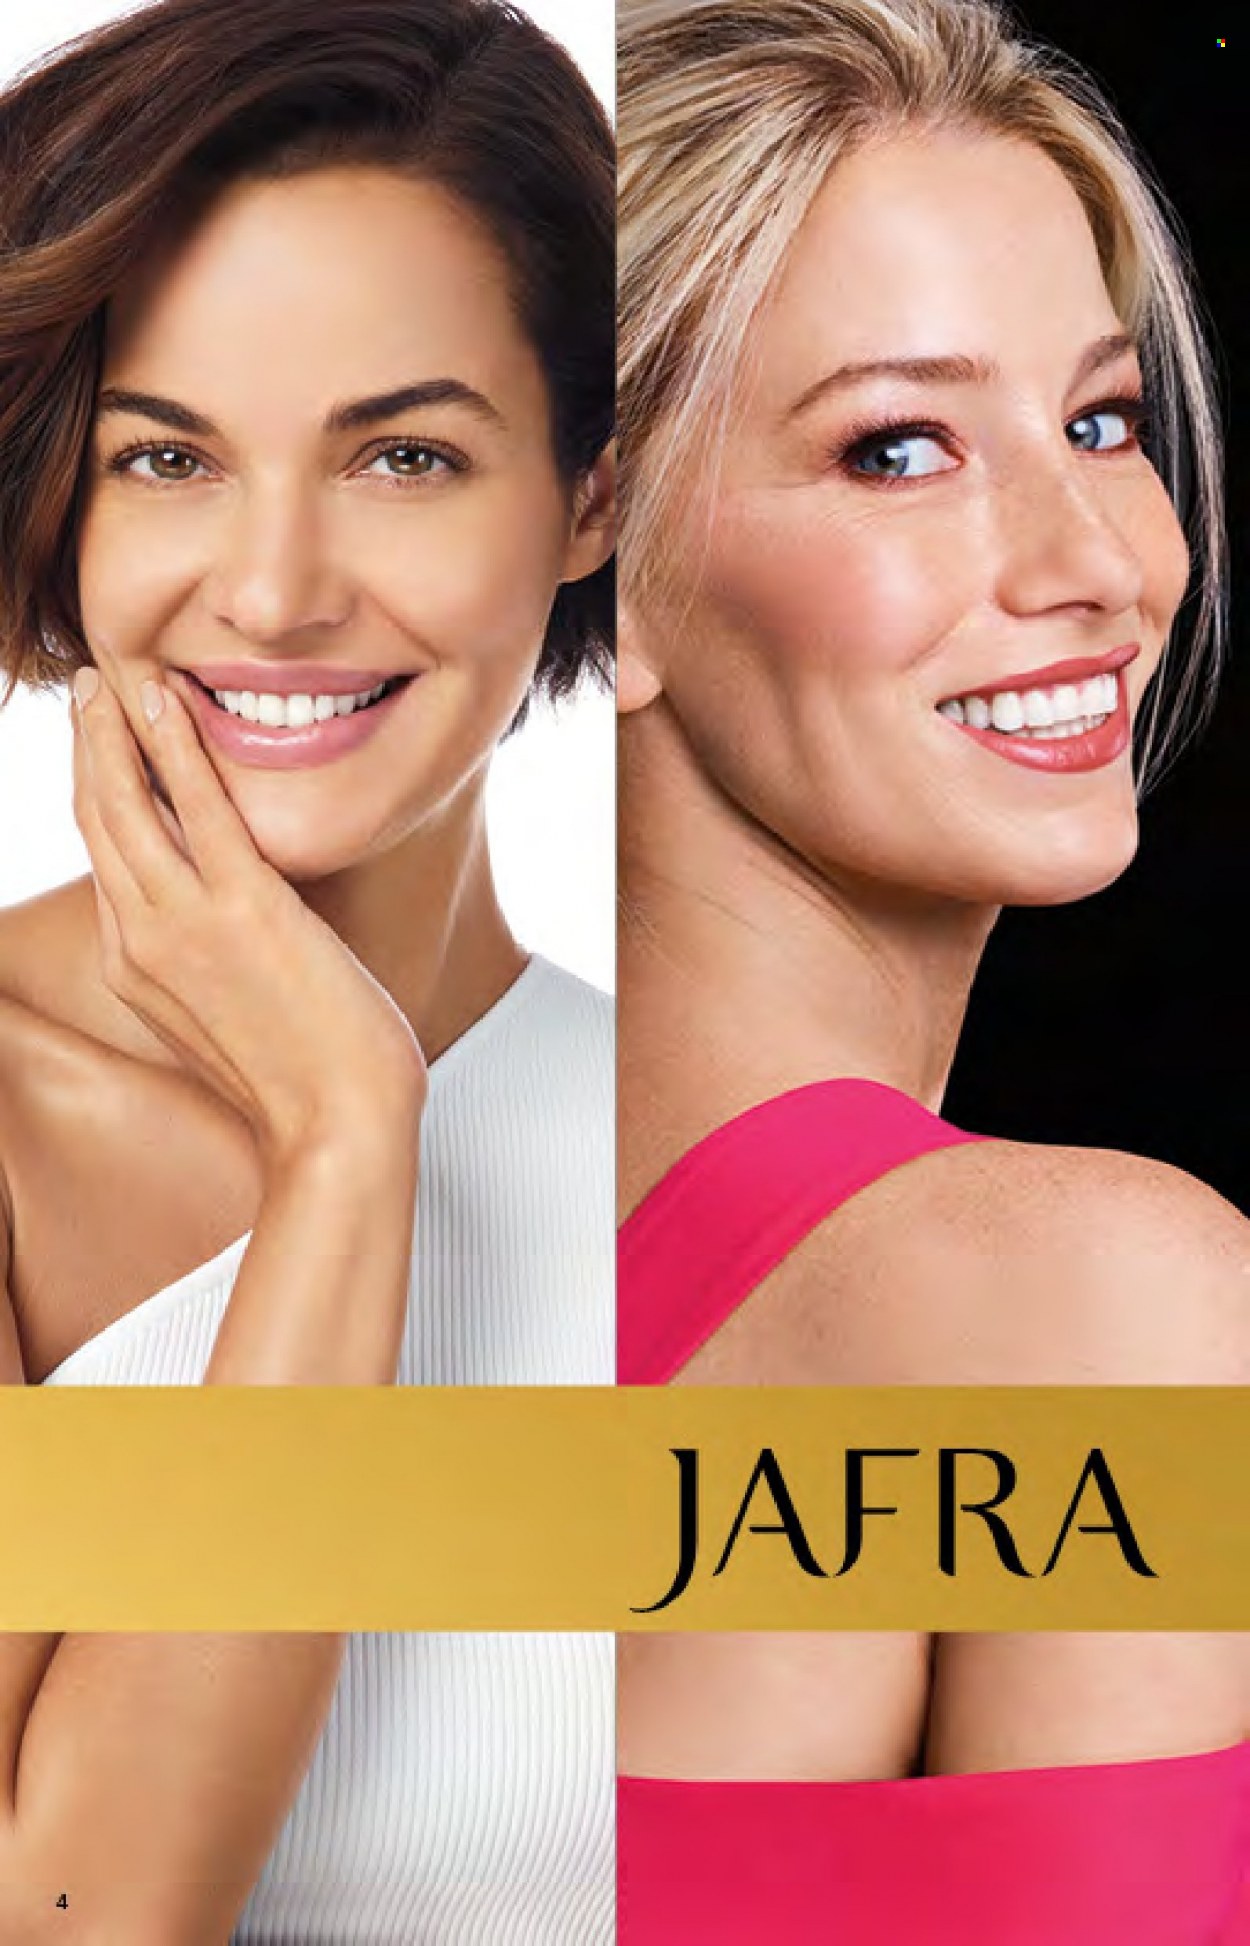 Catálogo Jafra.